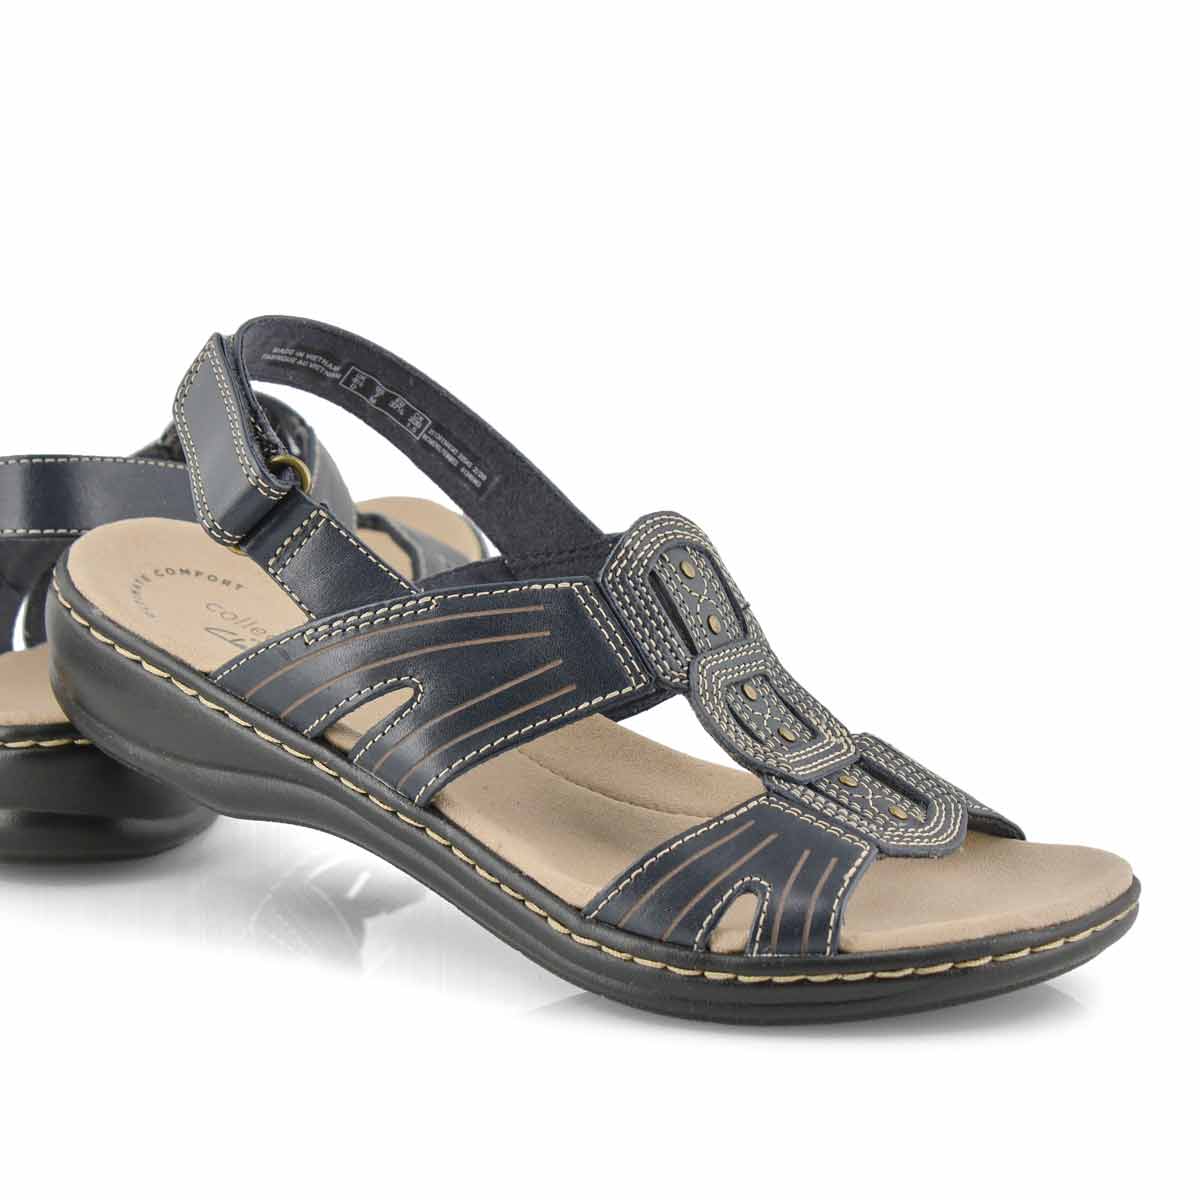 Clarks Women's LEISA VINE navy casual sandals | SoftMoc.com